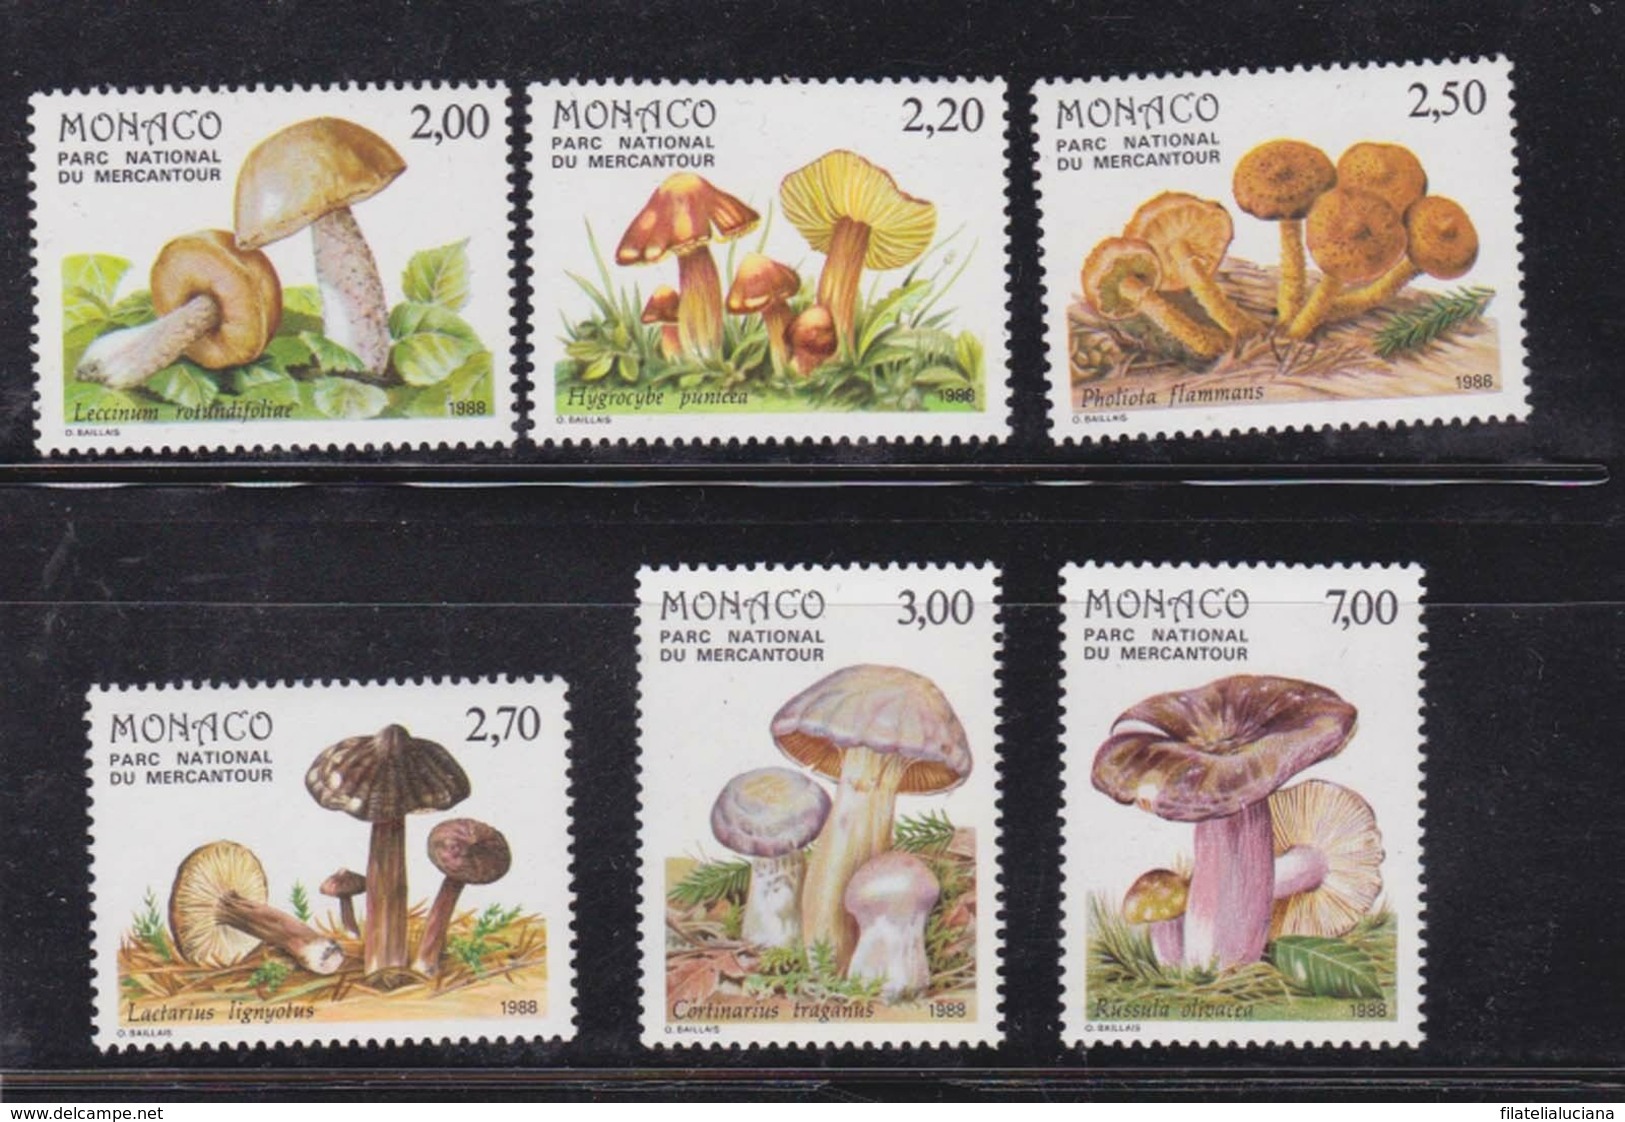 Monaco 1988 Full MNH Set Scott 1625-1630 Mushrooms - Mushrooms